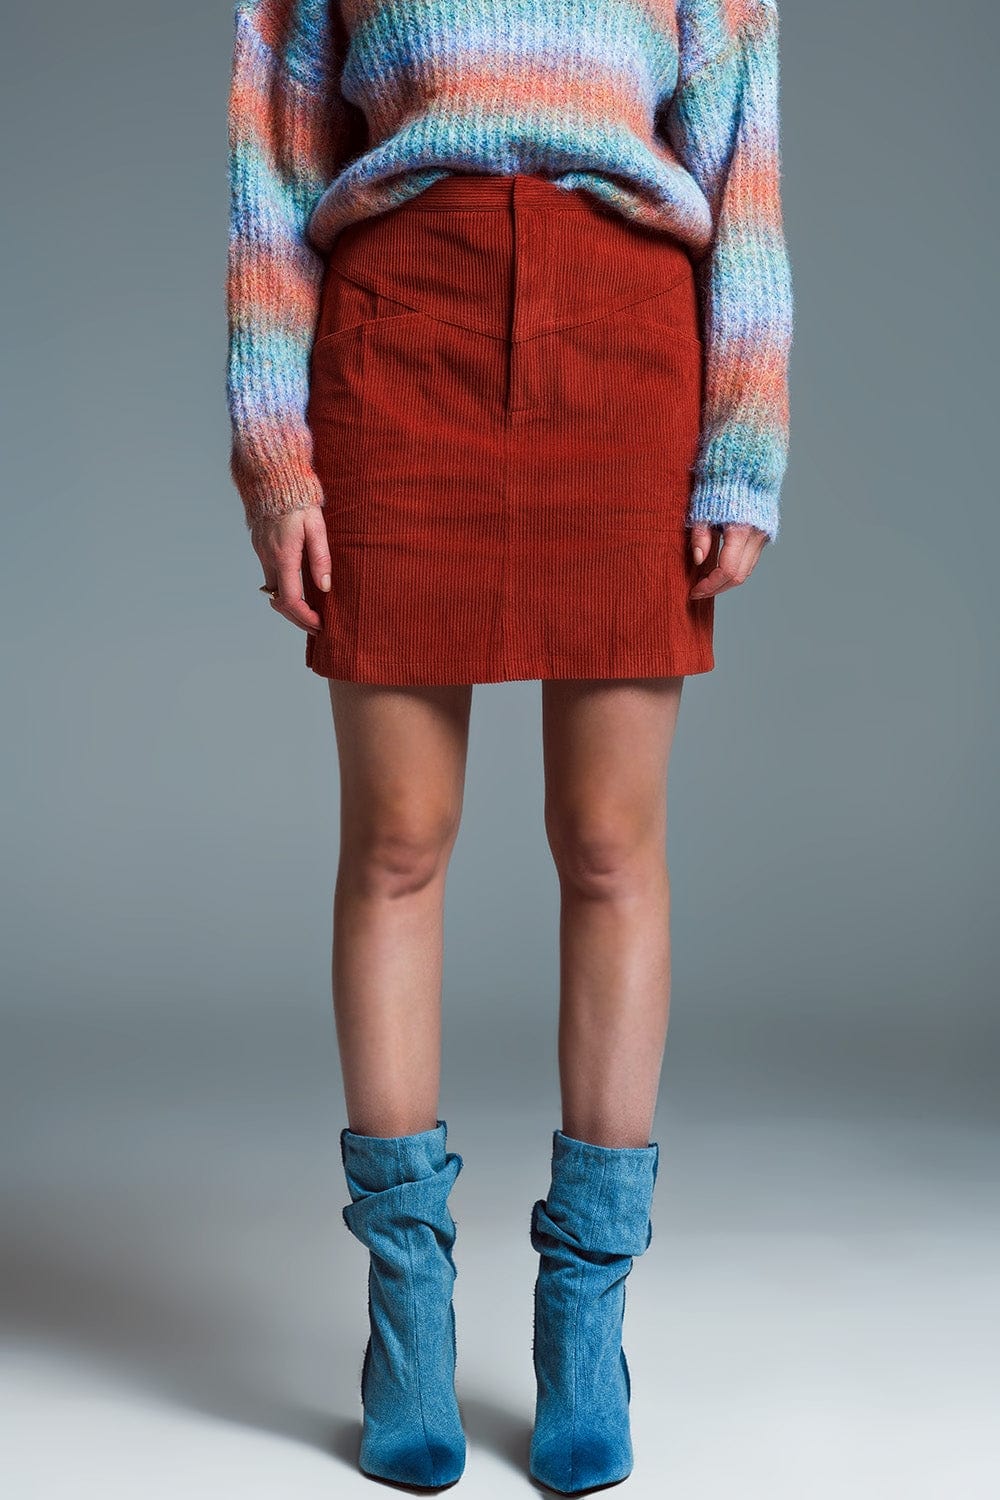 Q2 Women's Skirt Orange Corduroy Miniskirt With Pockets